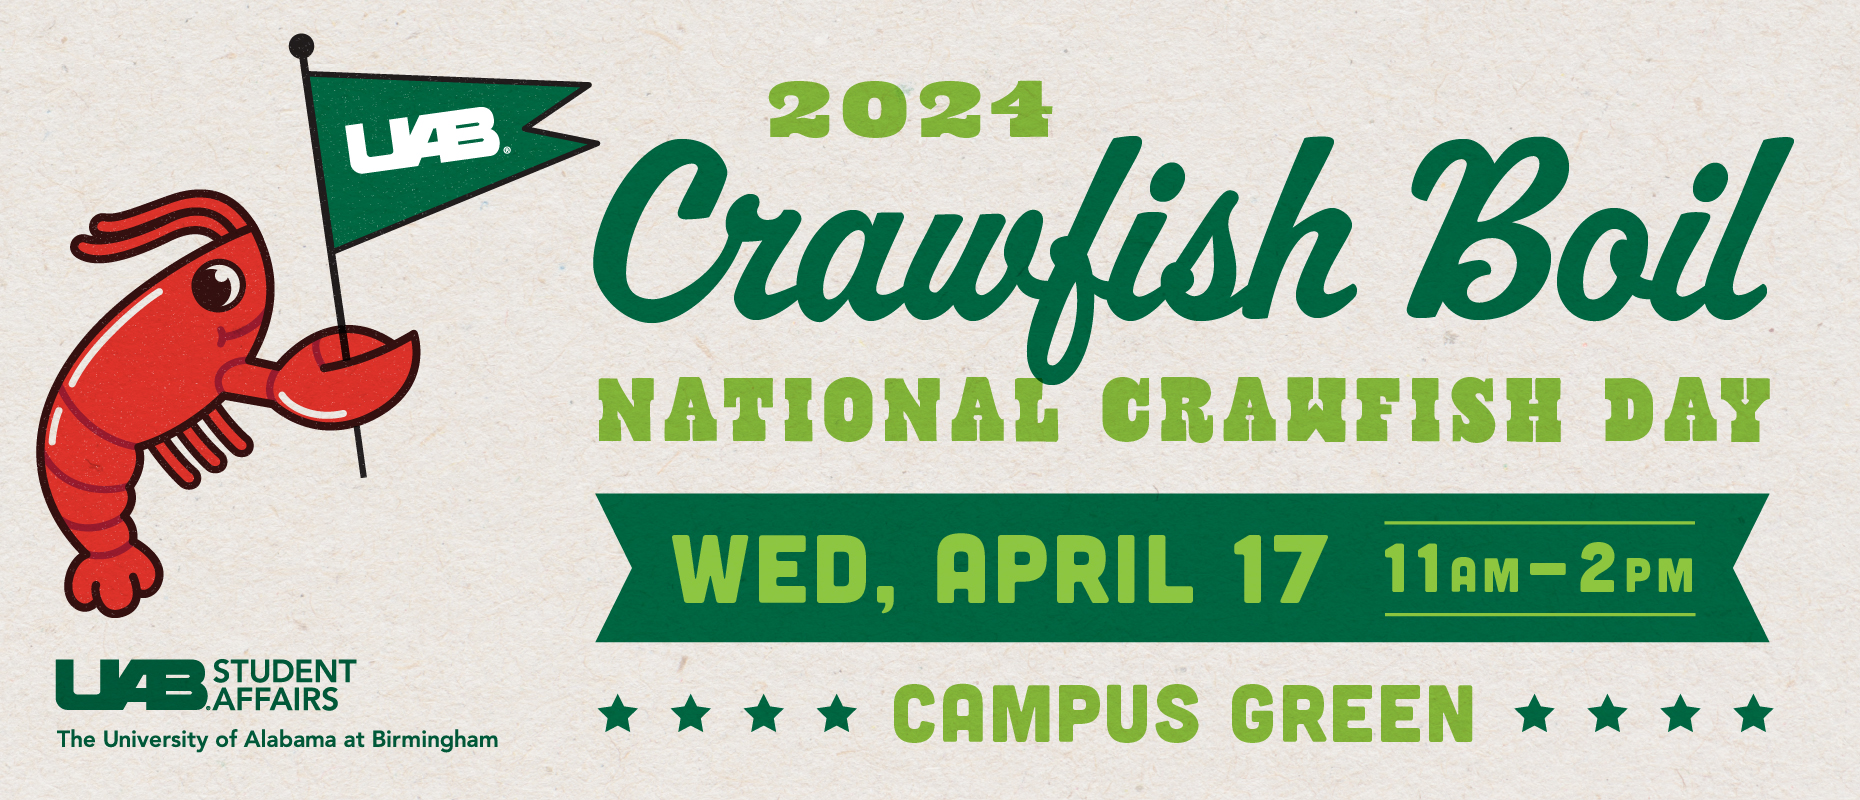 UAB 2024 Crawfish Boil: National Crawfish Day - Wednesday, April 17, 11:00am-2:00pm, Campus Green.